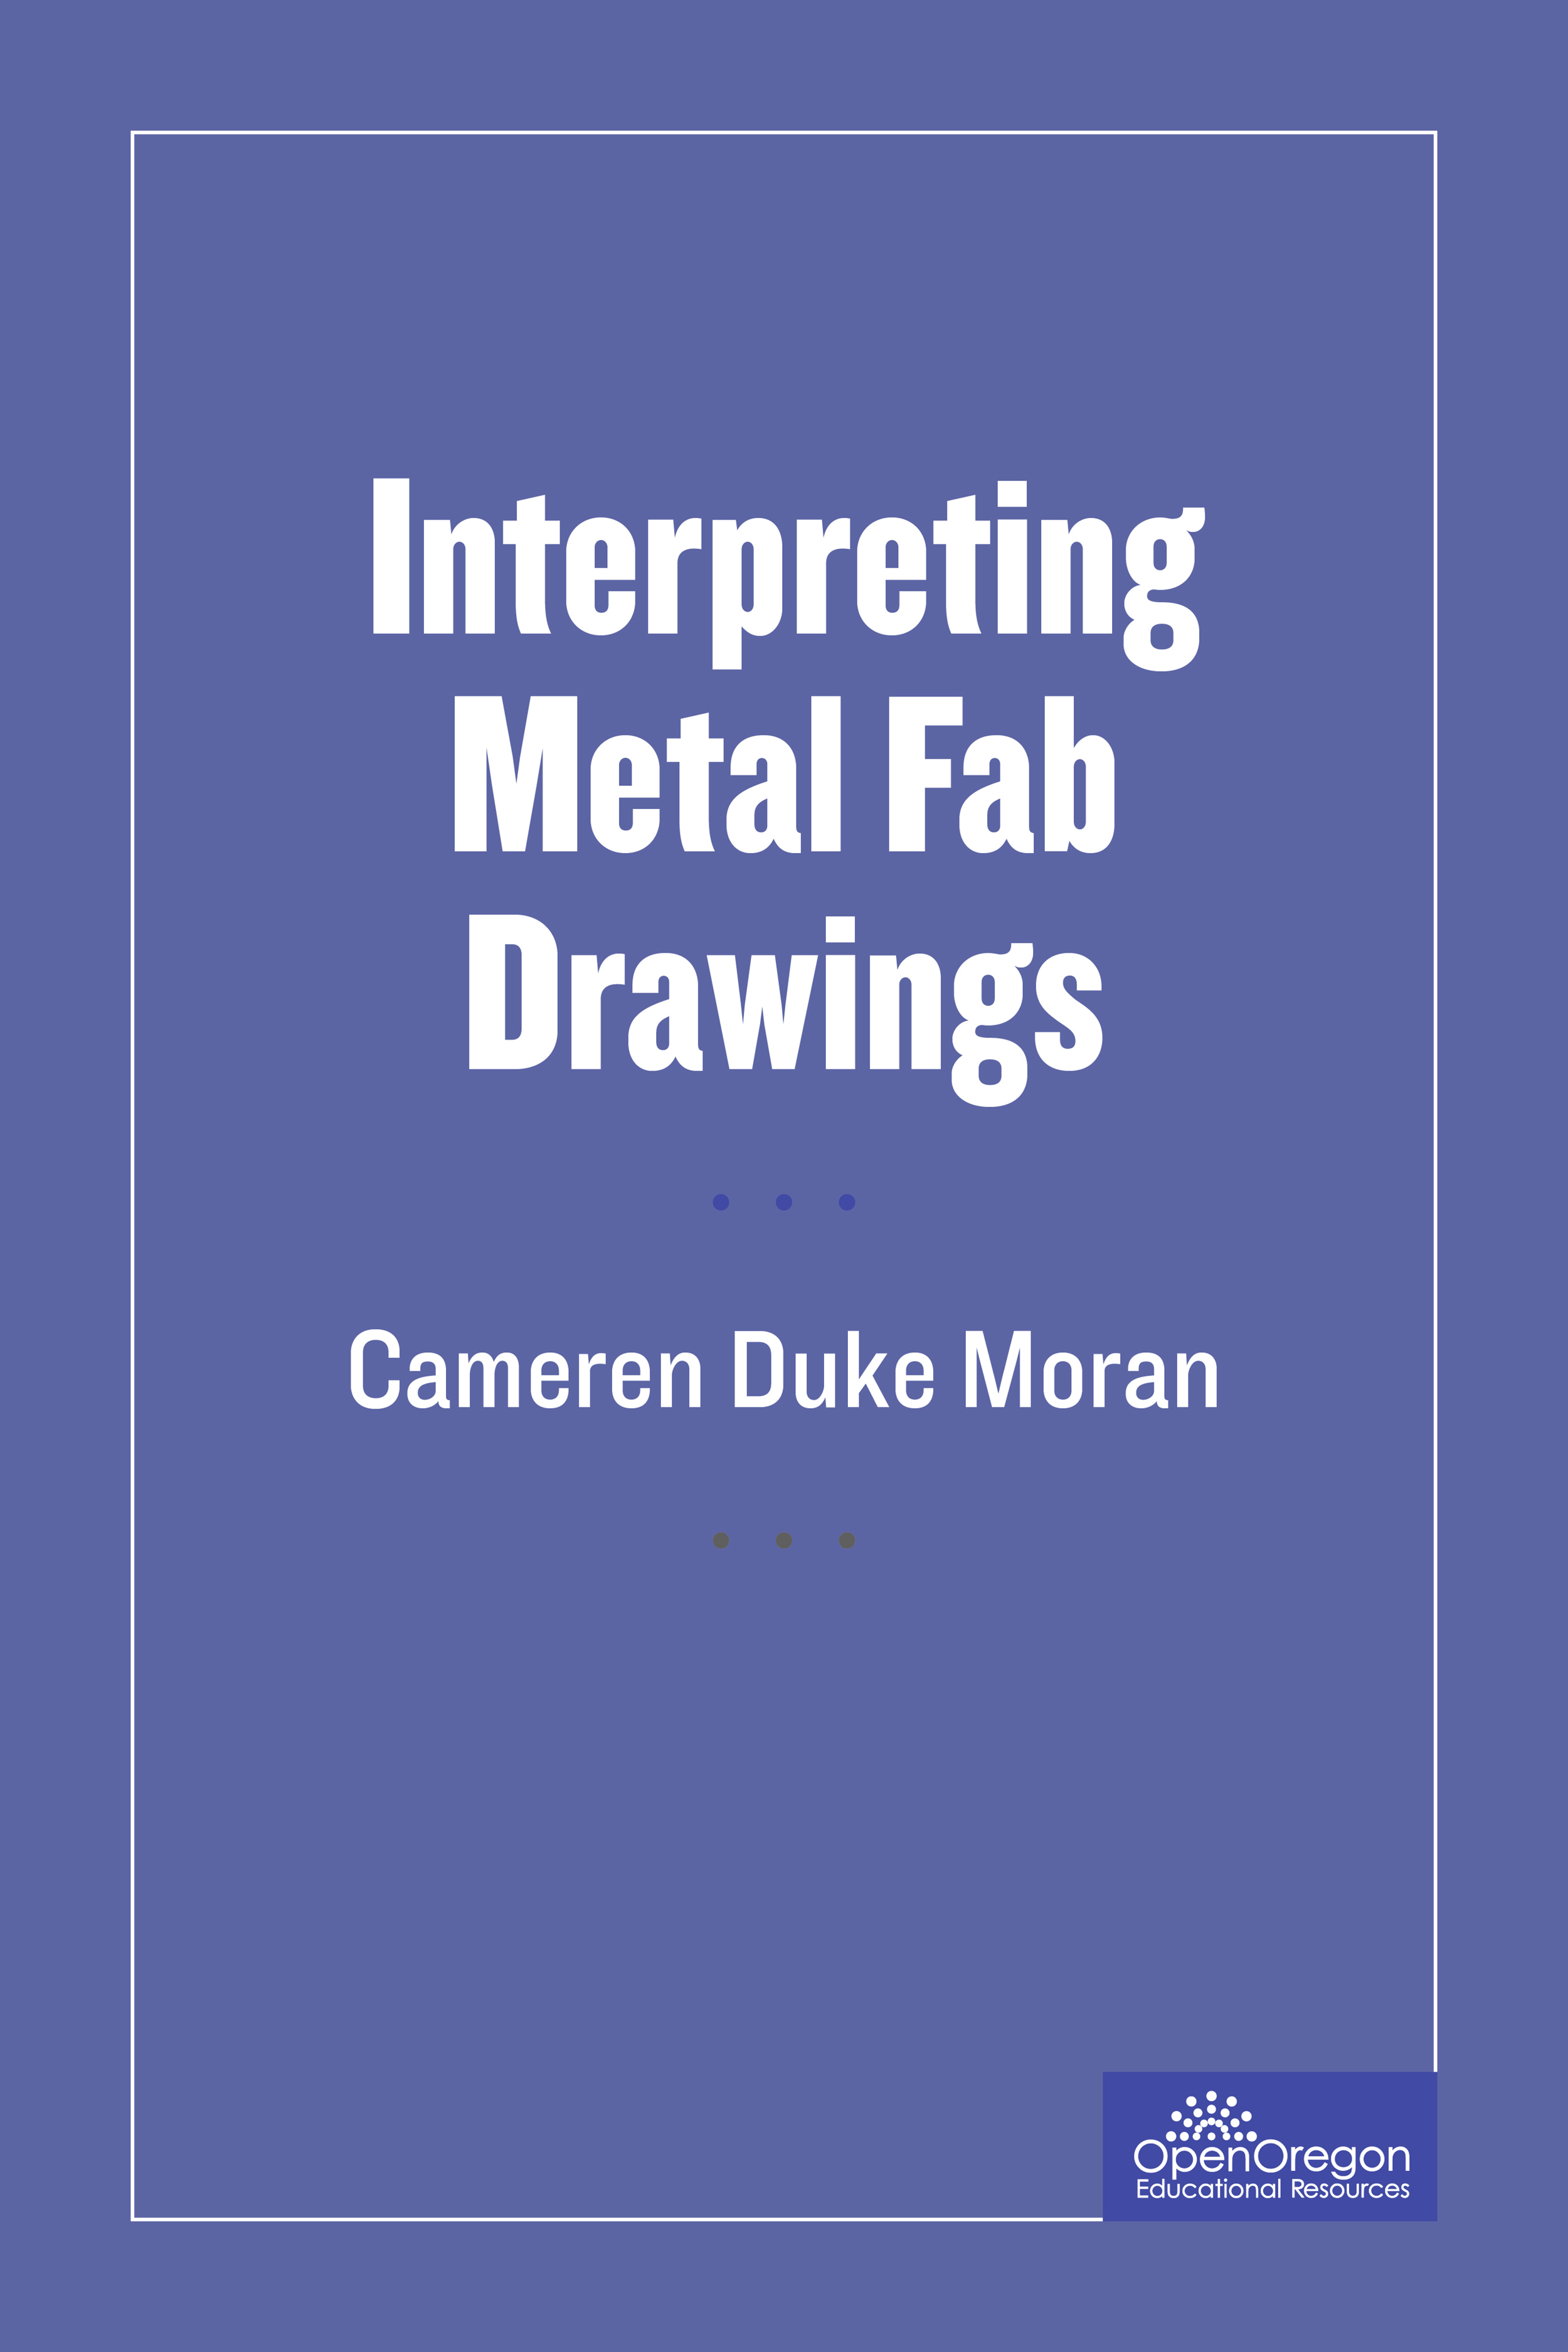 Interpretation of Metal Fab Drawings